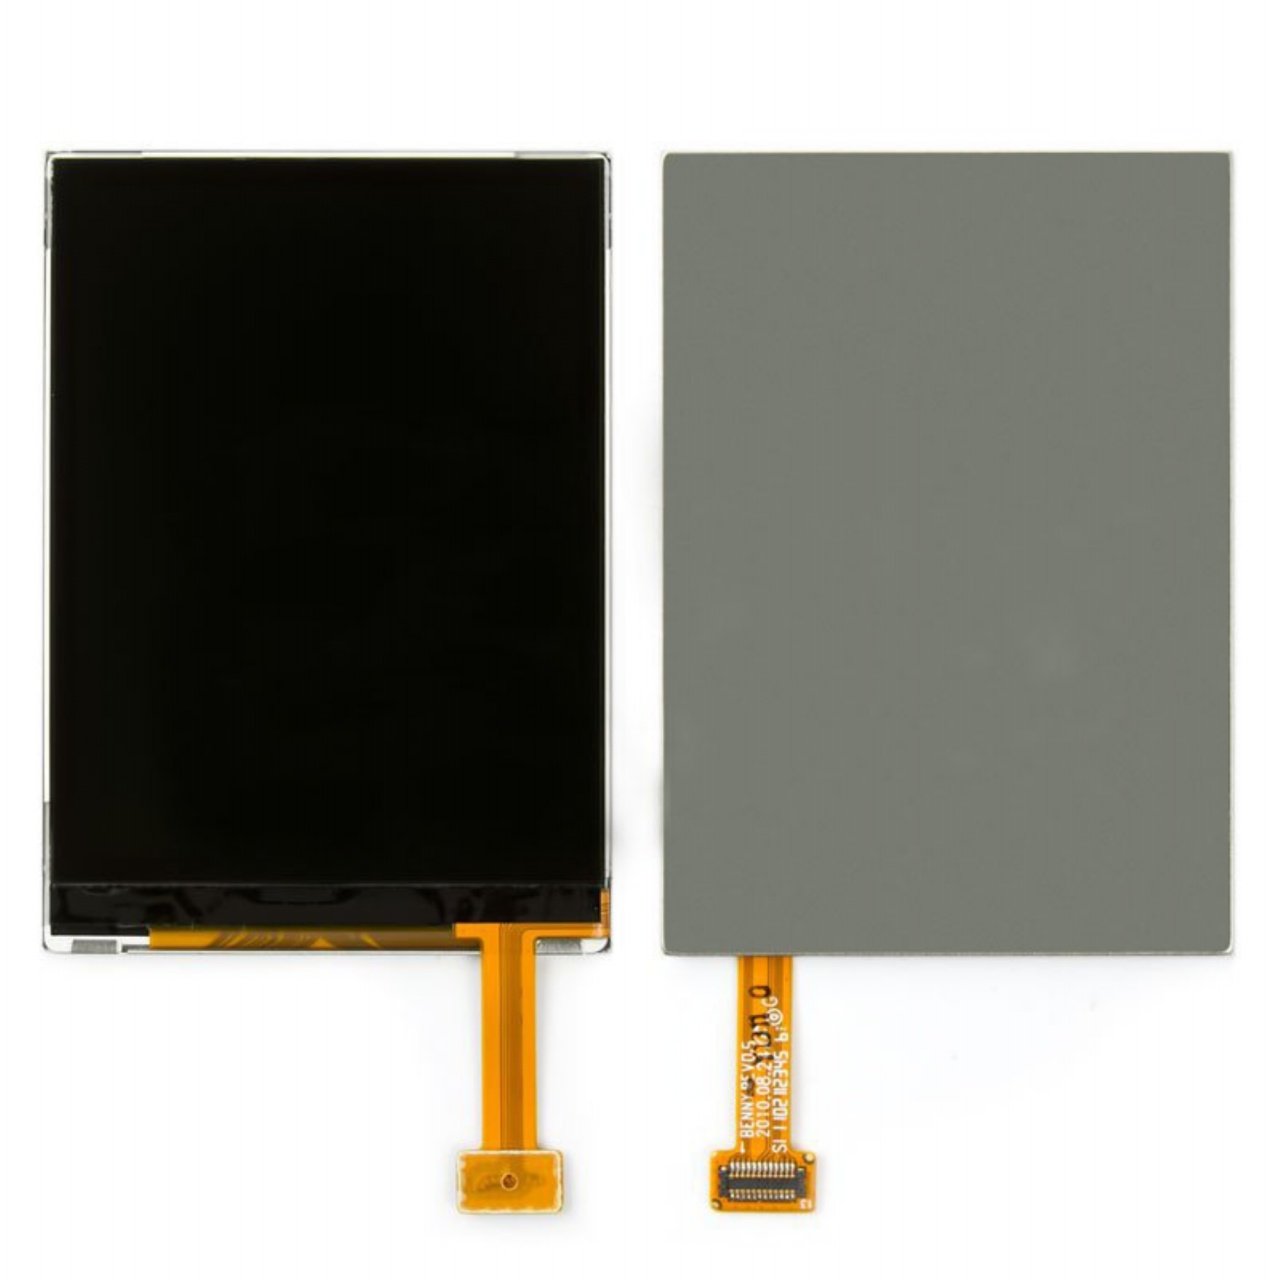 NOKİA X3-02 - C3-01 LCD İÇ EKRAN PANEL